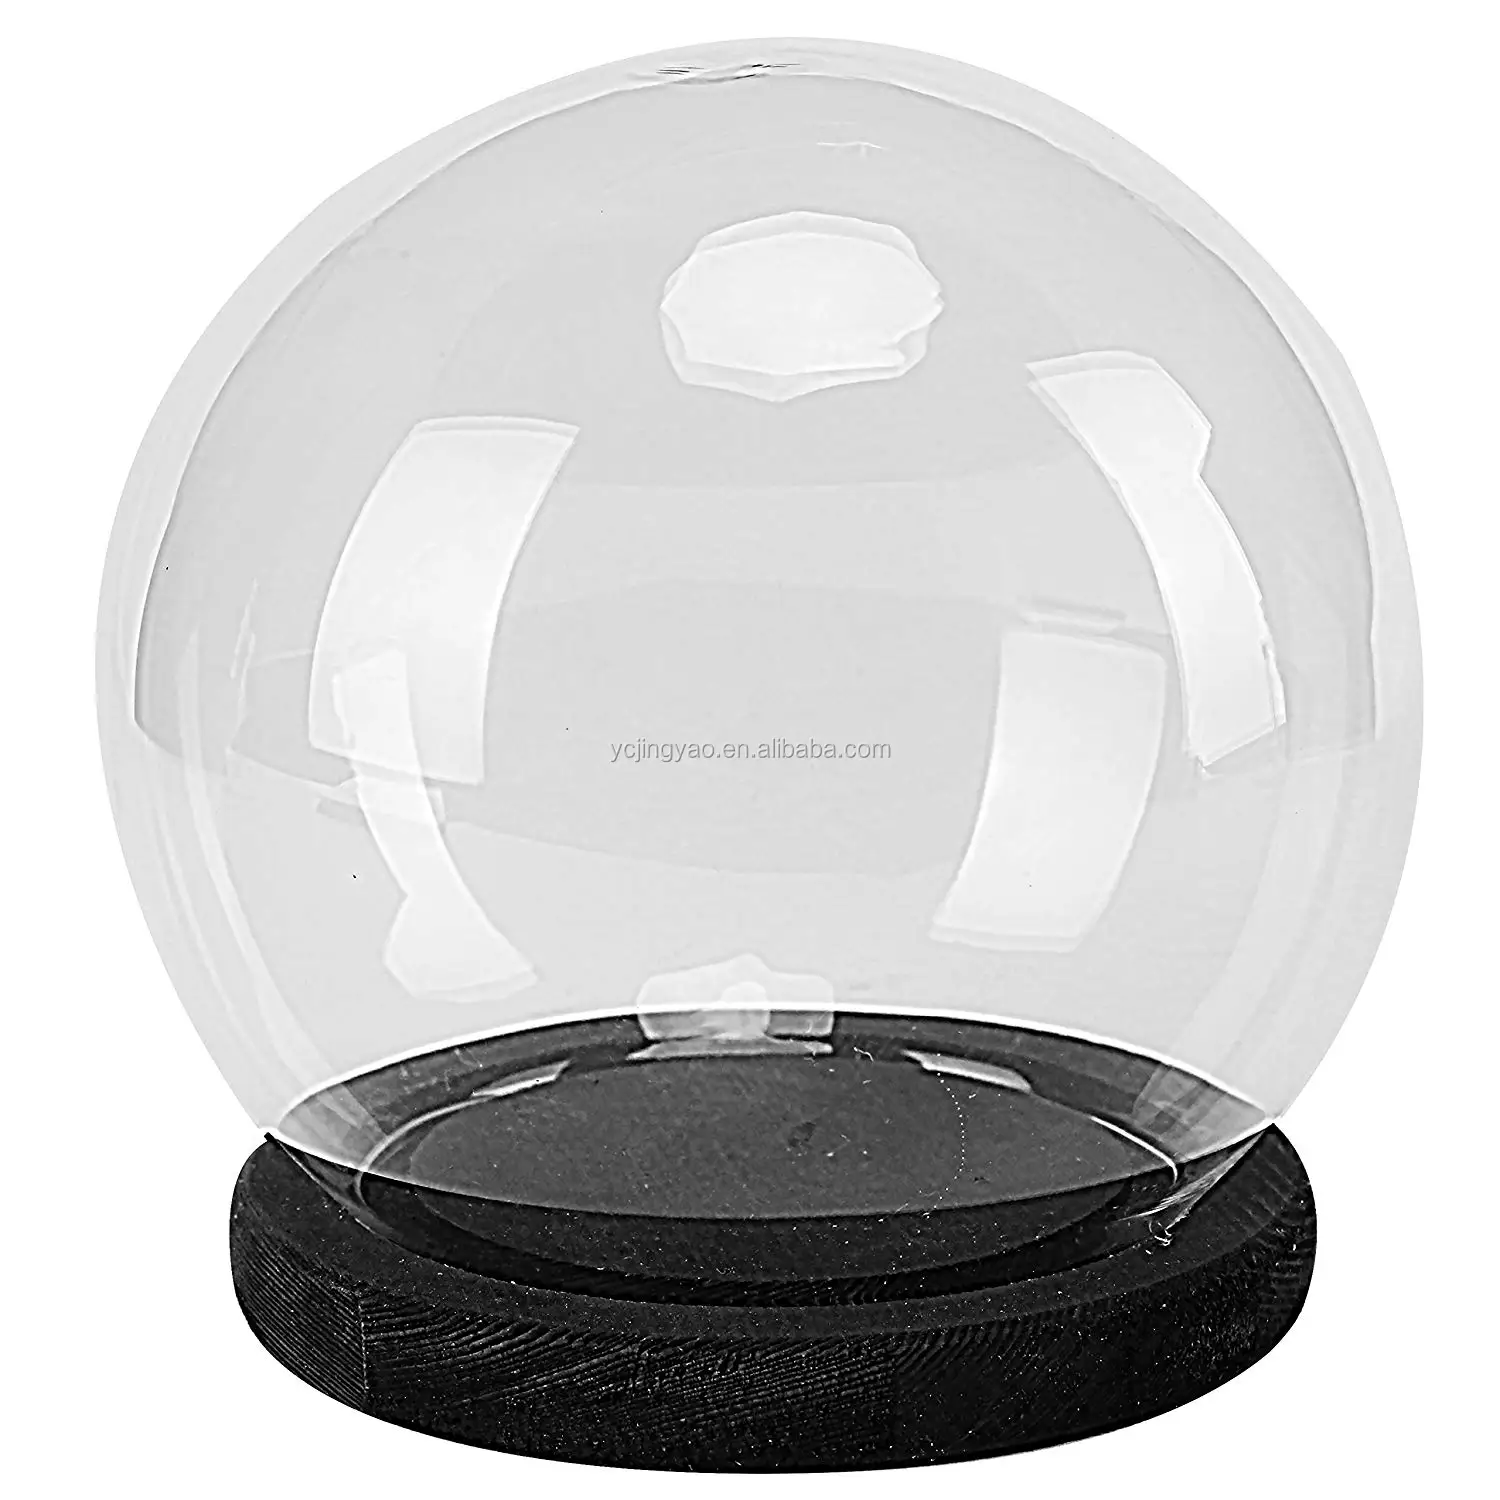 

6 Inch Clear Glass Terrarium Keepsake Display Cloche Globe Dome with Black Wood Base